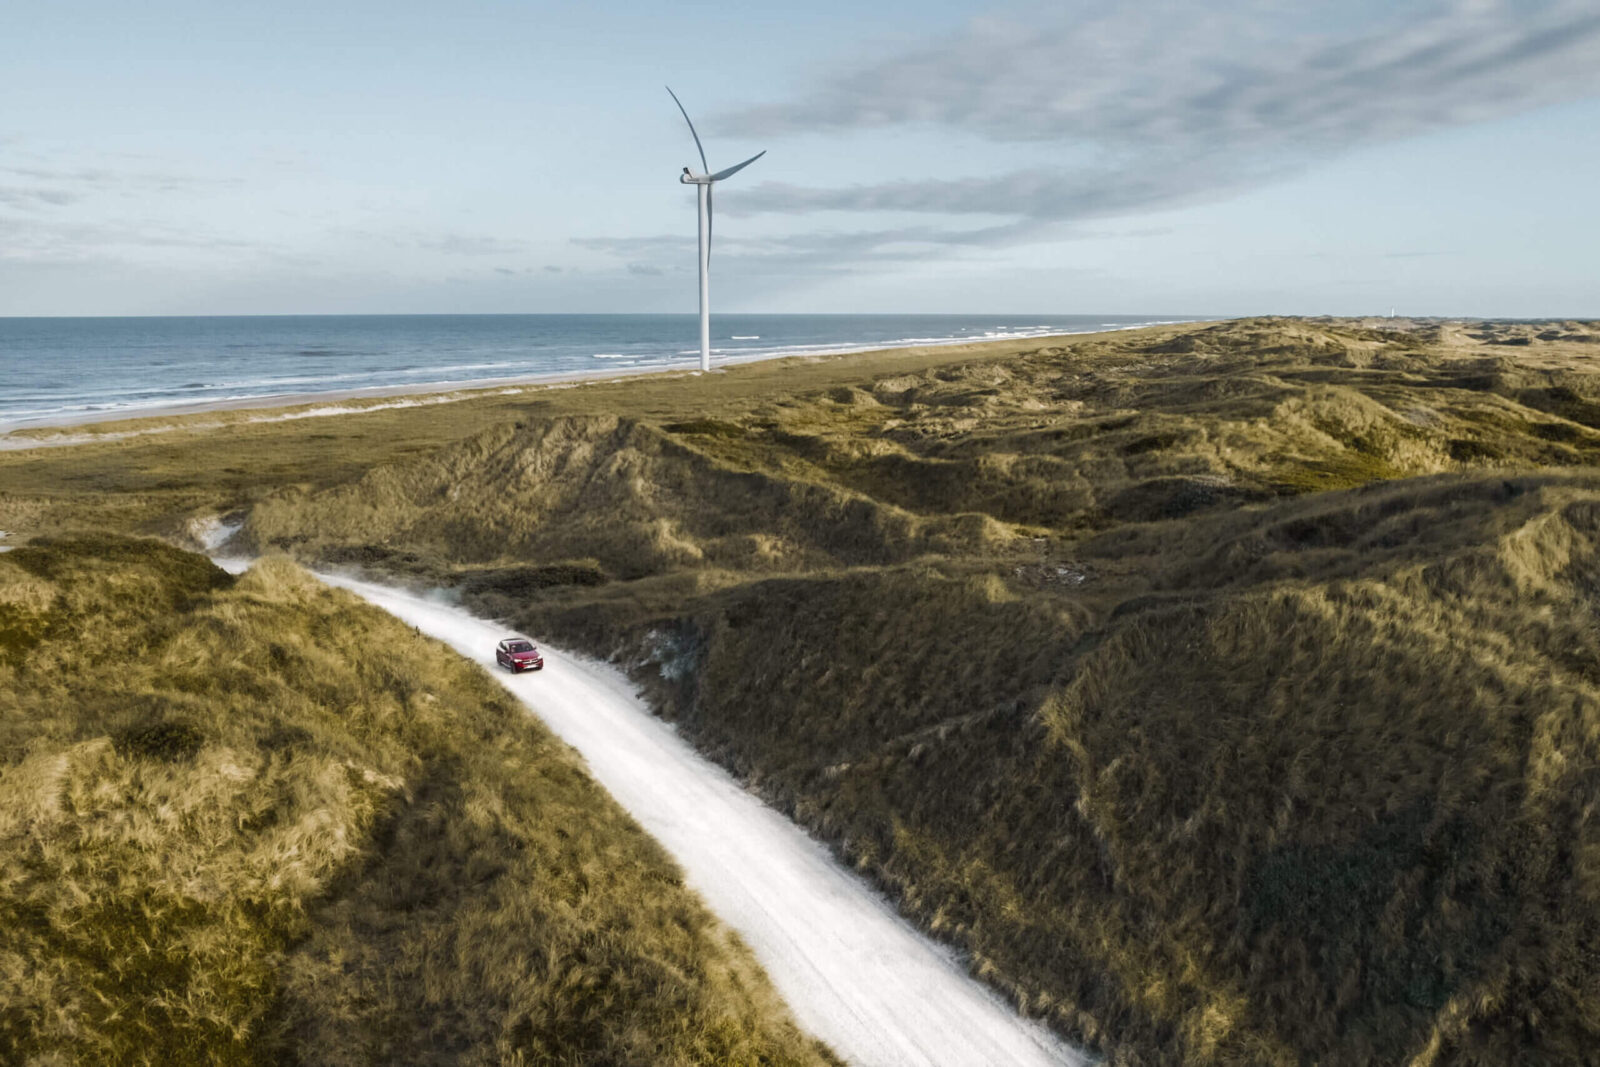 Mercedes-Benz EQC campaign shoot Nordics. Production services by Moonland.